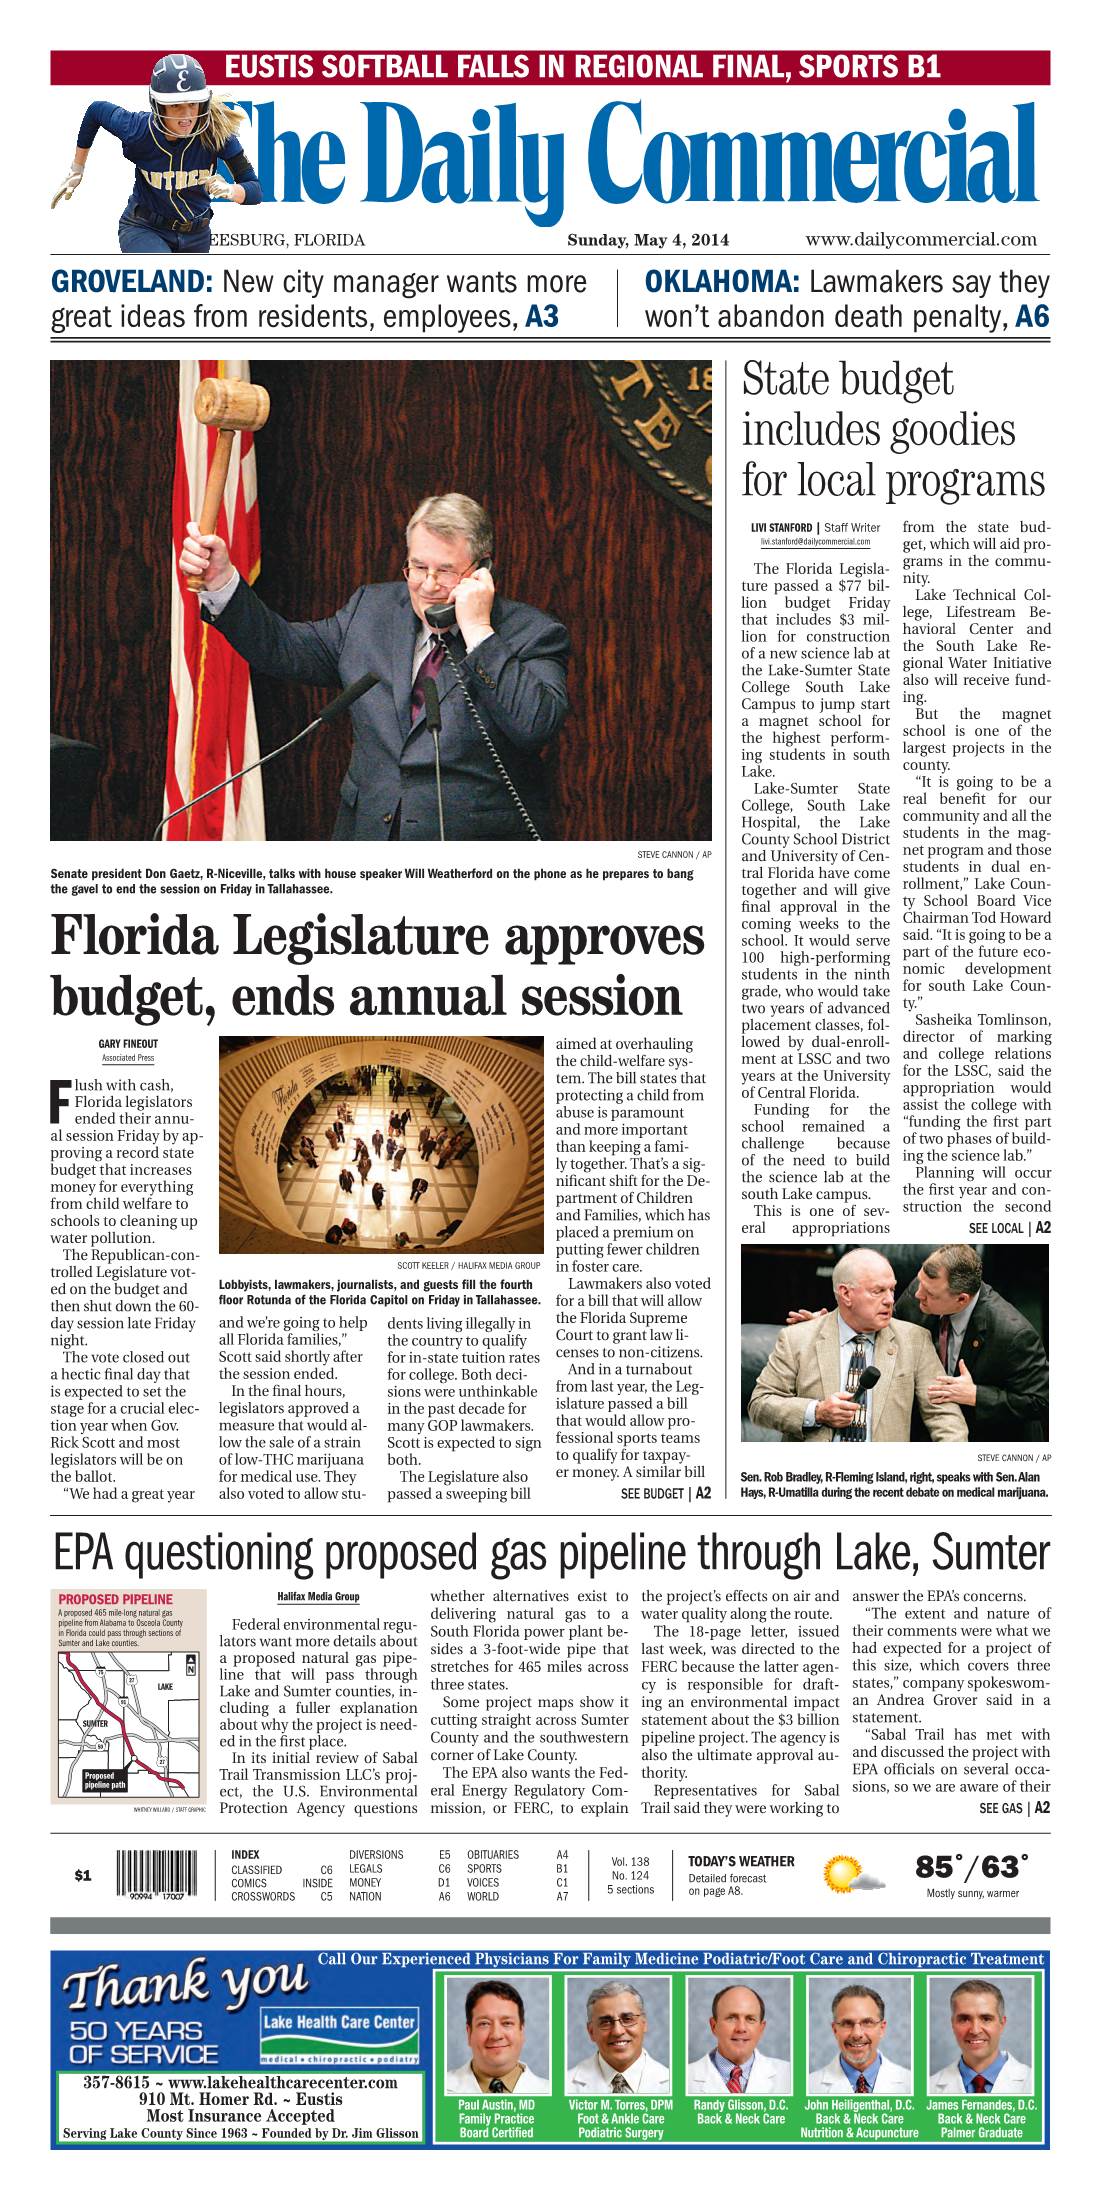 Florida Legislature Approves Budget, Ends Annual Session